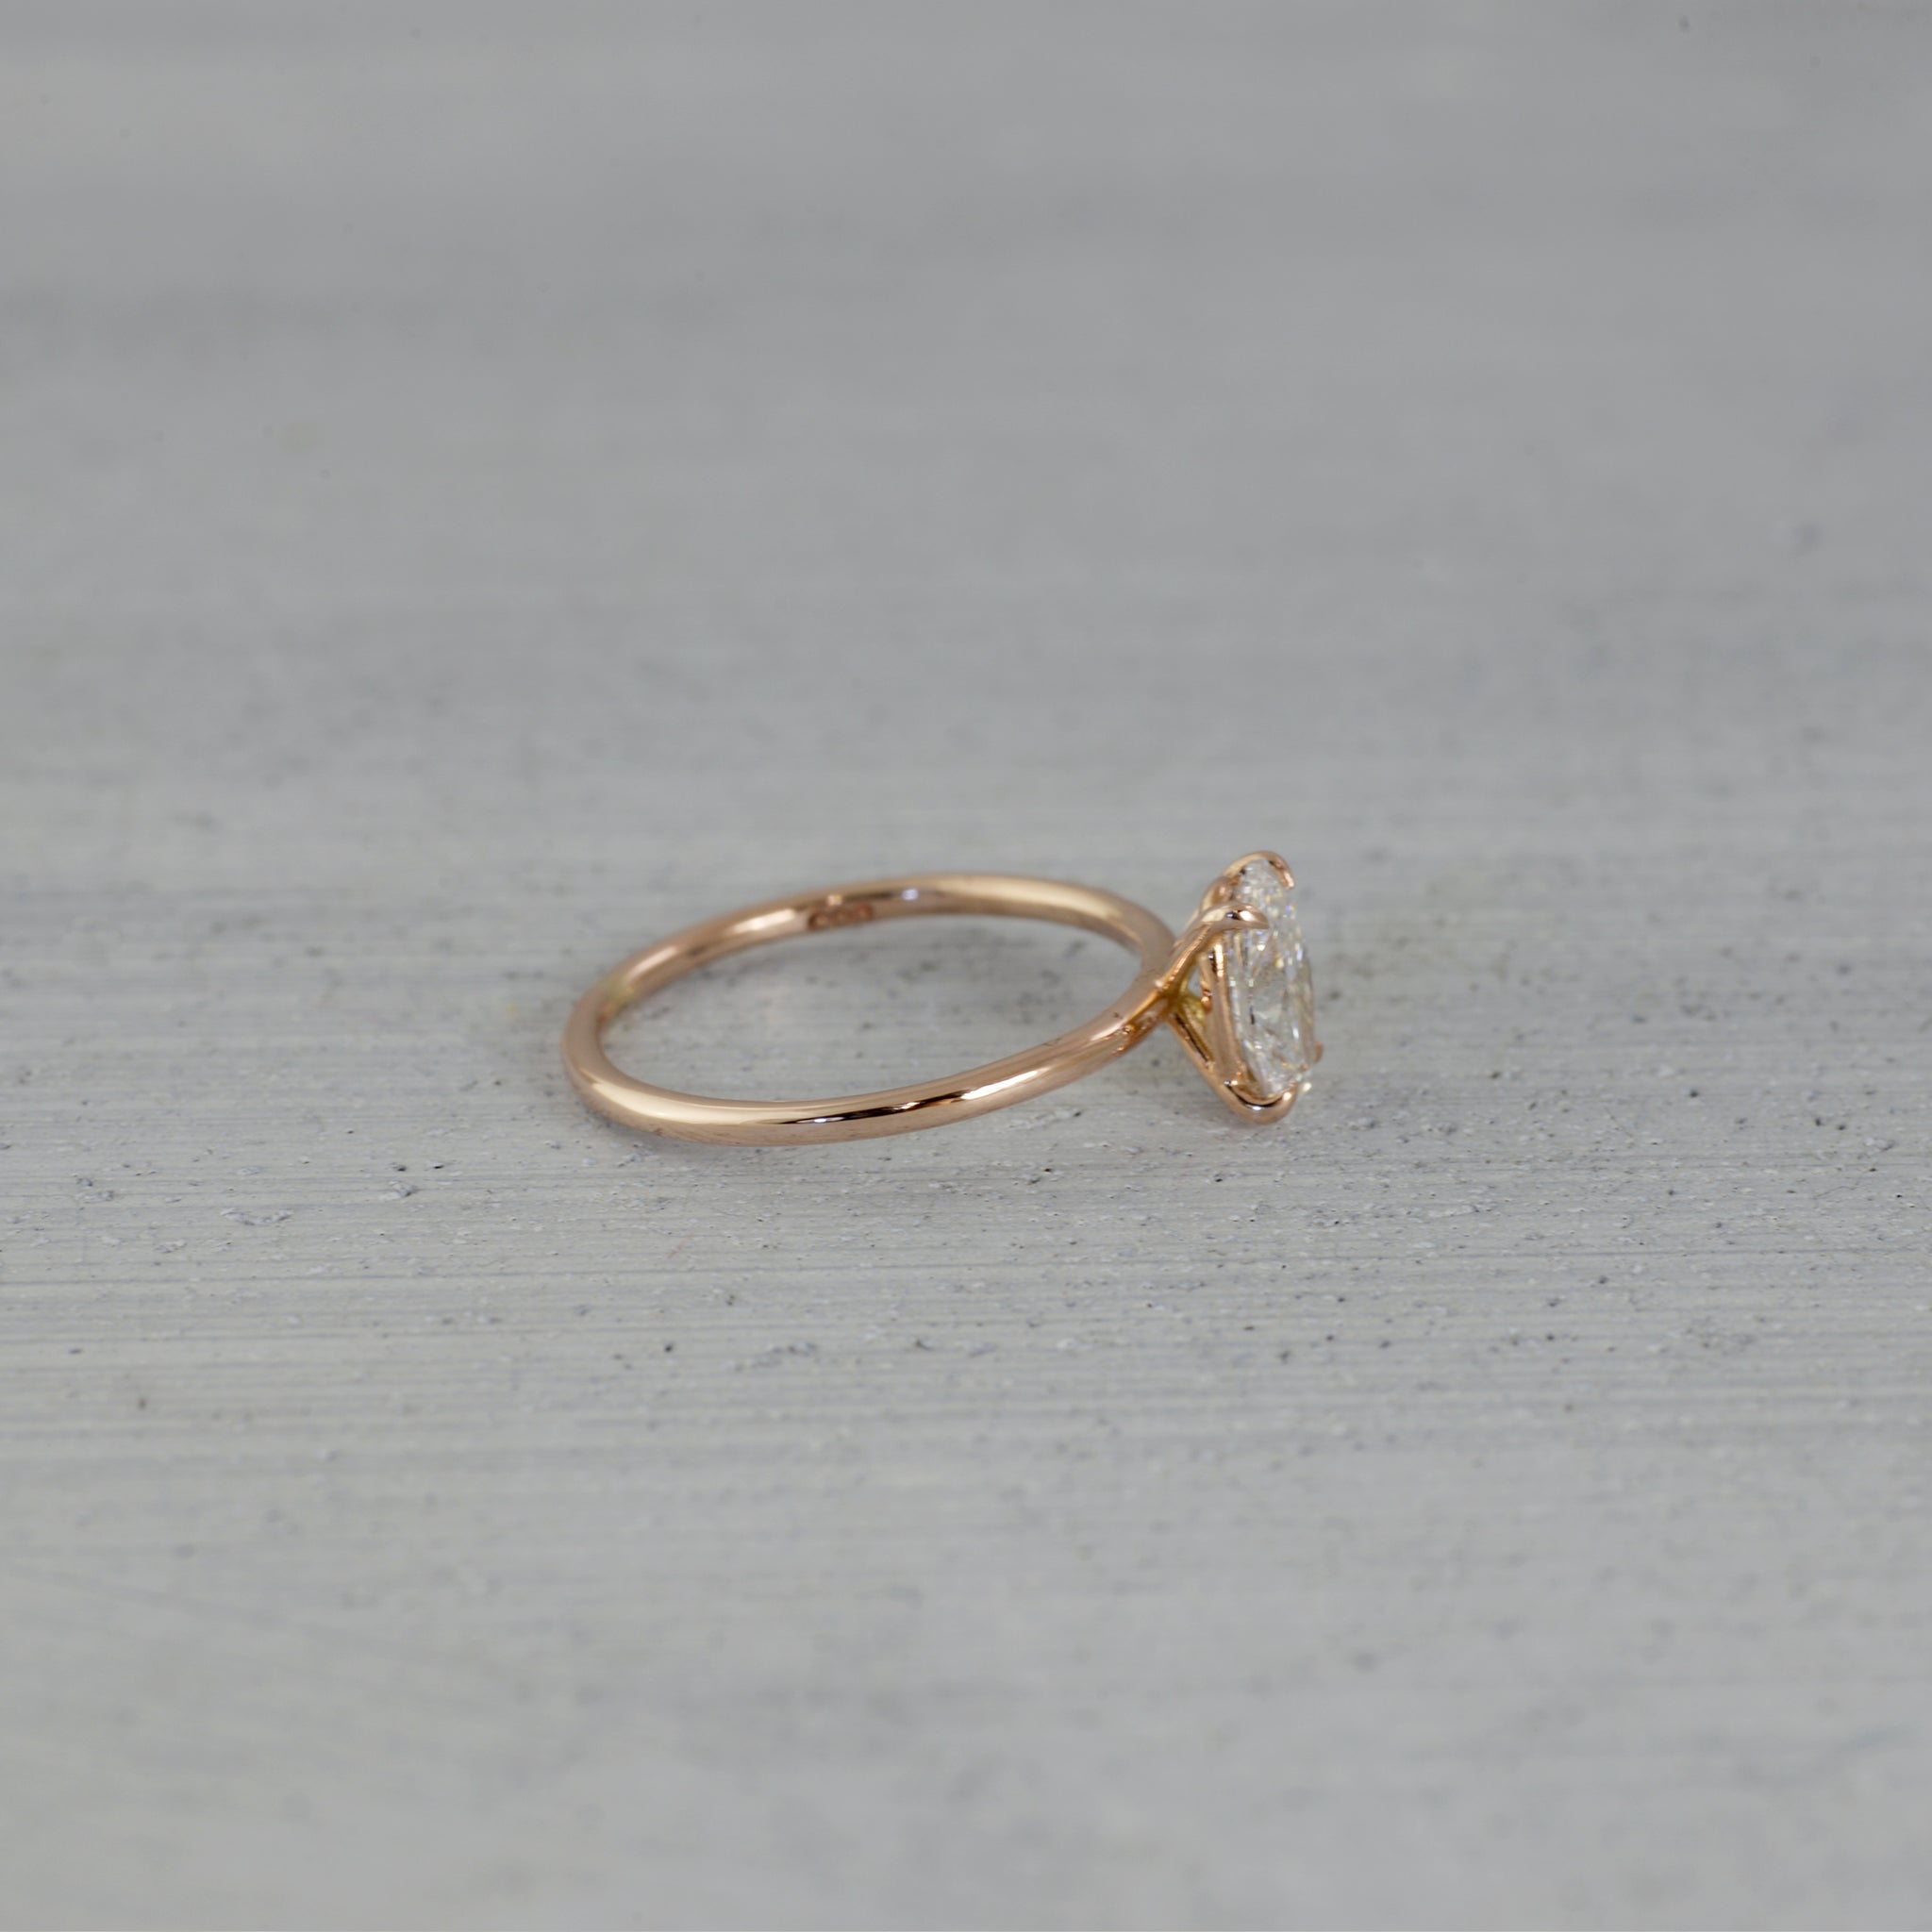 Oval solitaire venus Ring (5x7mm/ semi-precious) - 14K/ 18K Gold